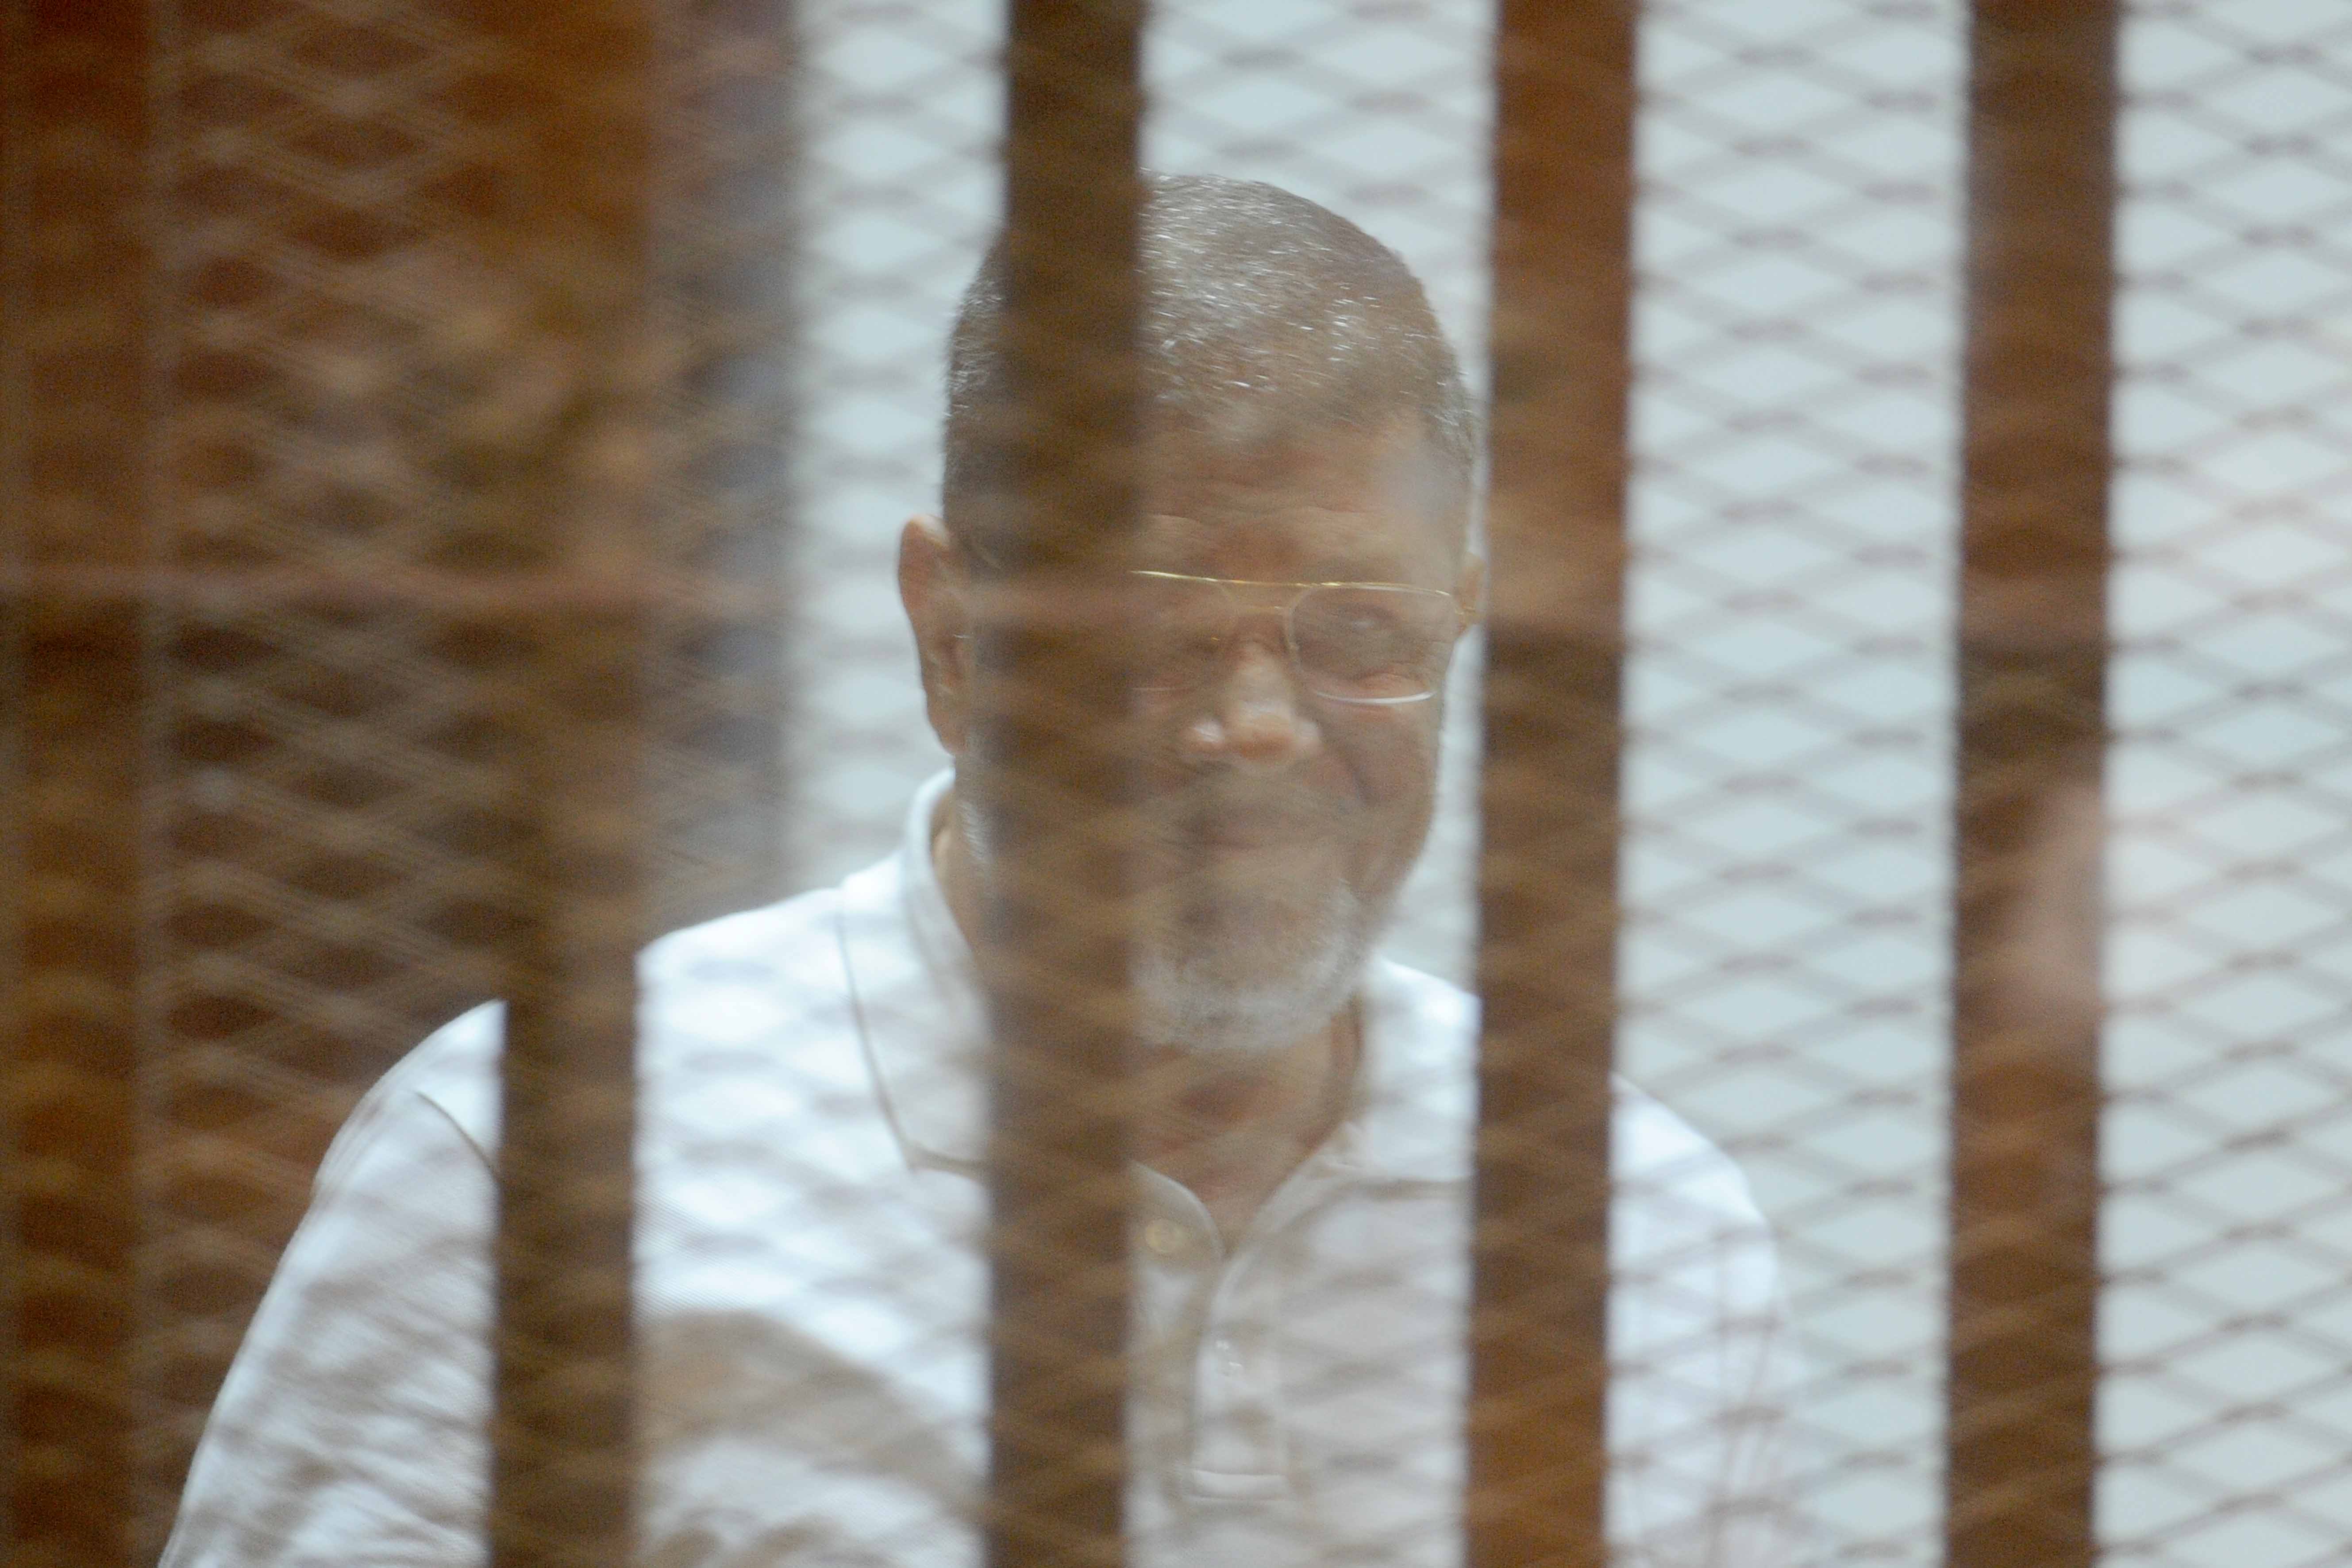 Morsi’s ‘prison break’ trial adjourned to 25 February